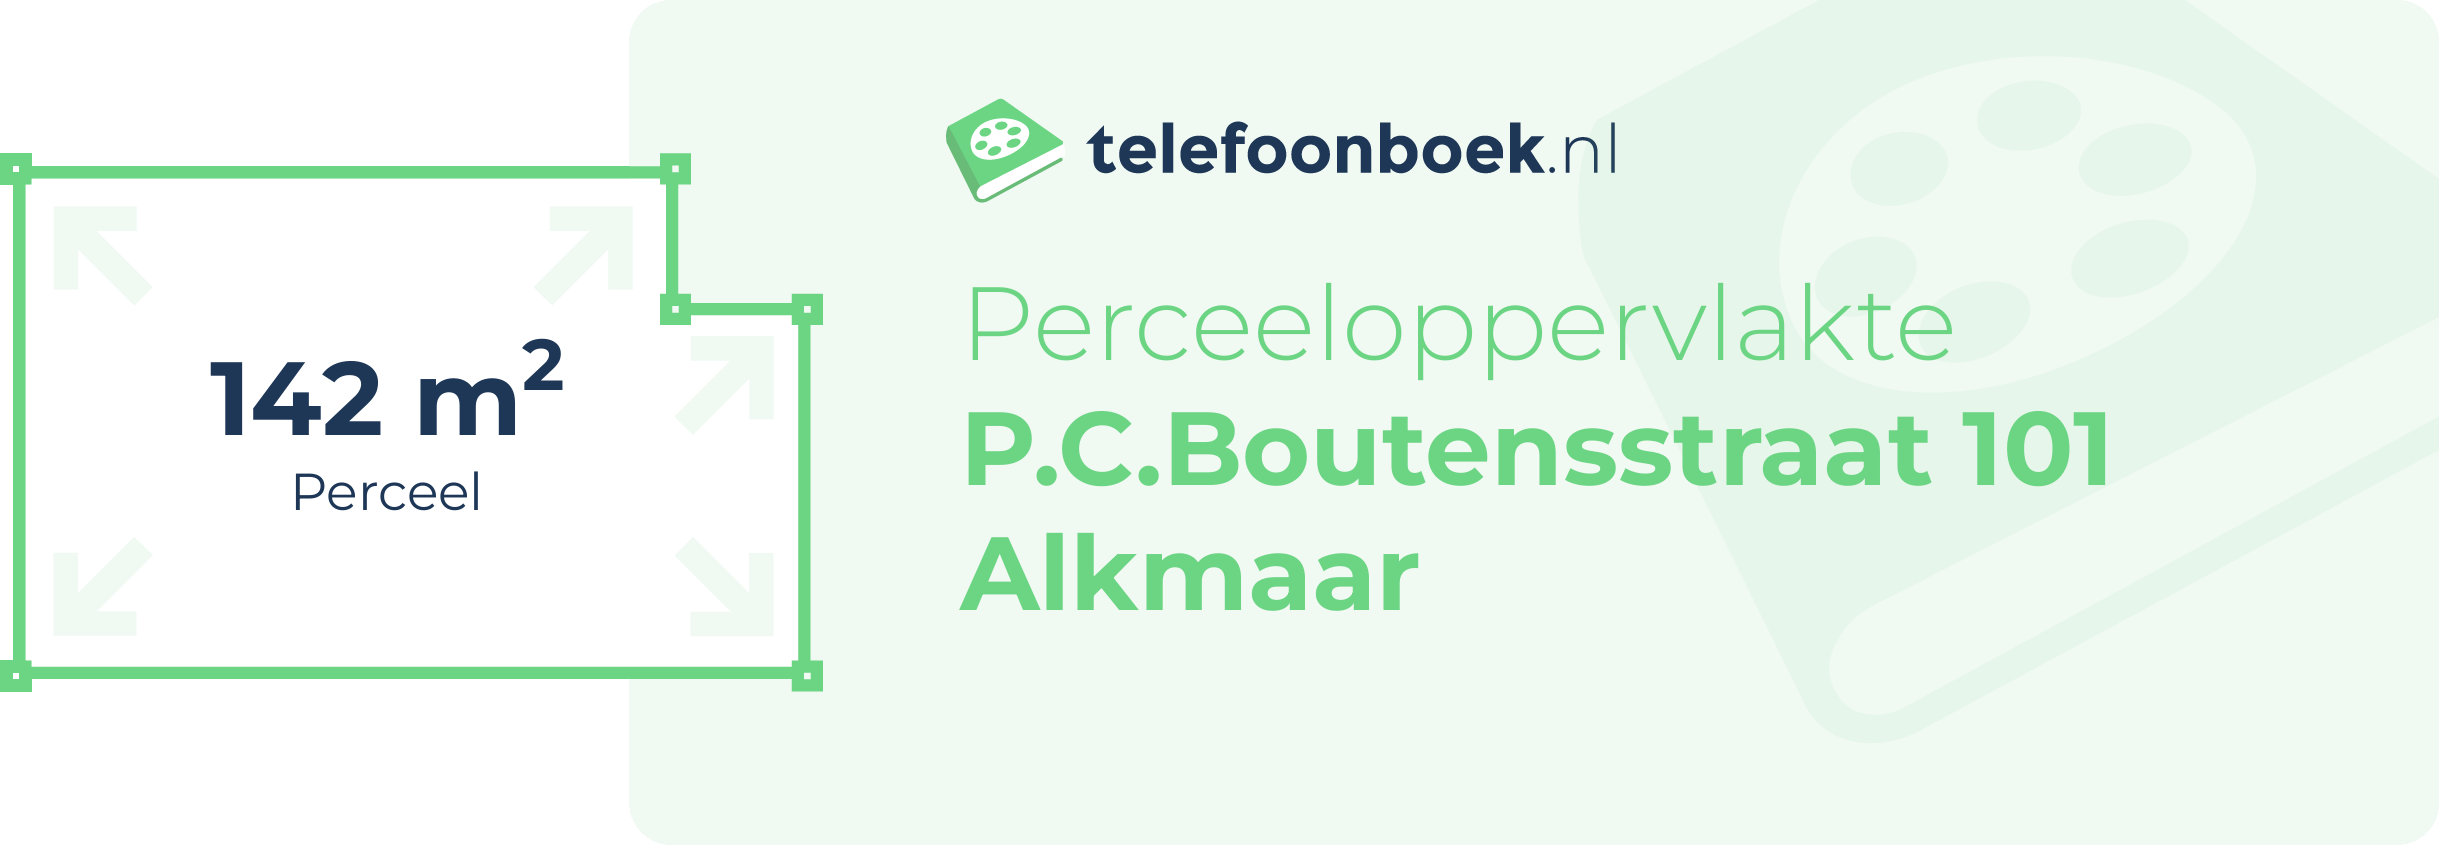 Perceeloppervlakte P.C.Boutensstraat 101 Alkmaar